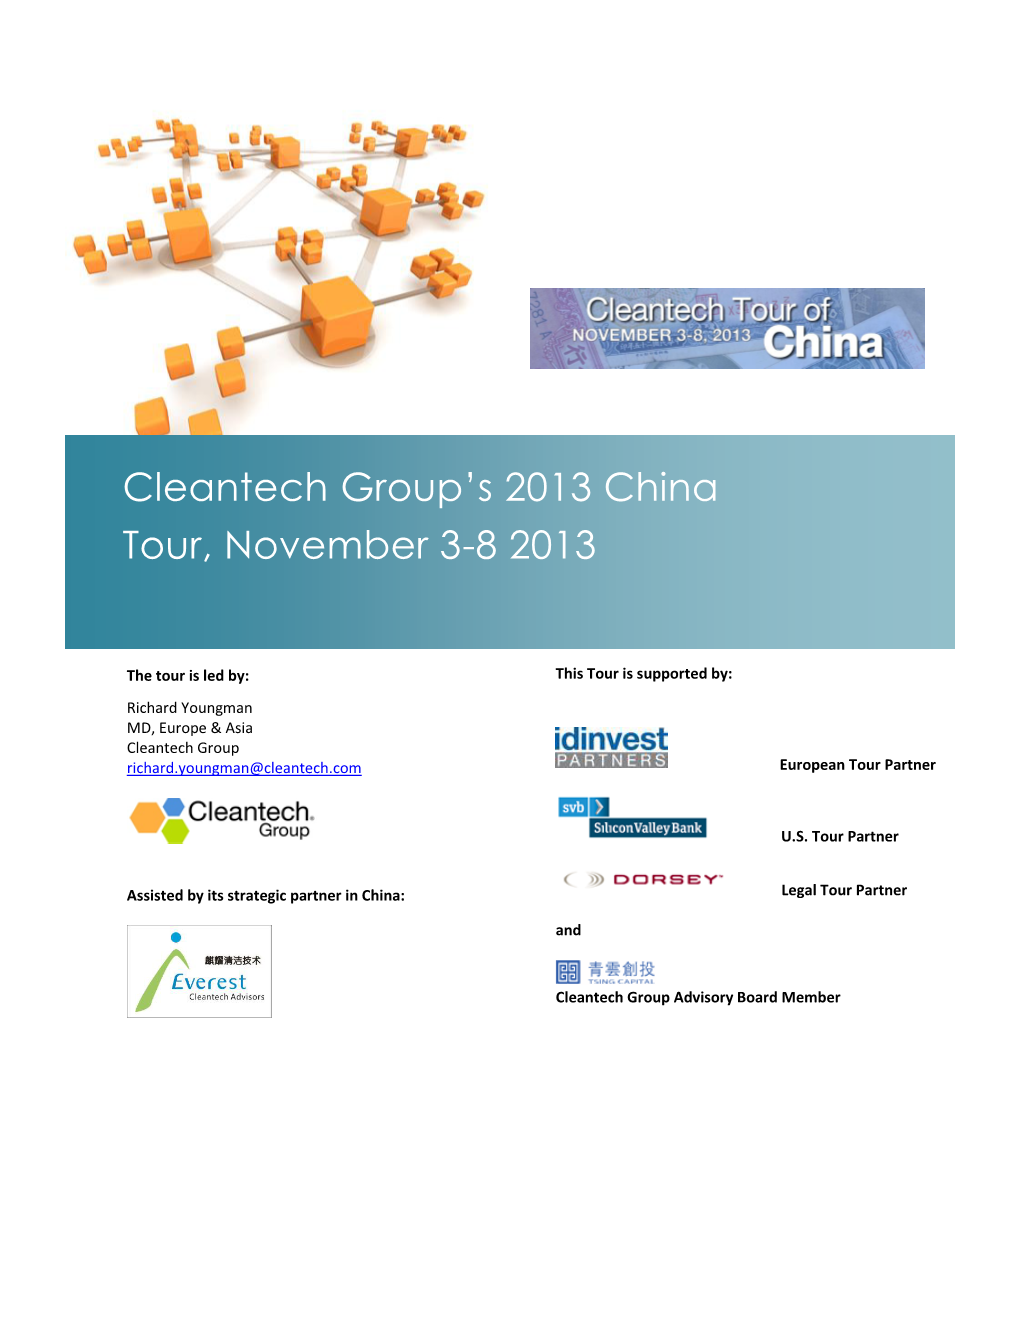 Cleantech Group's 2013 China Tour, November 3-8 2013